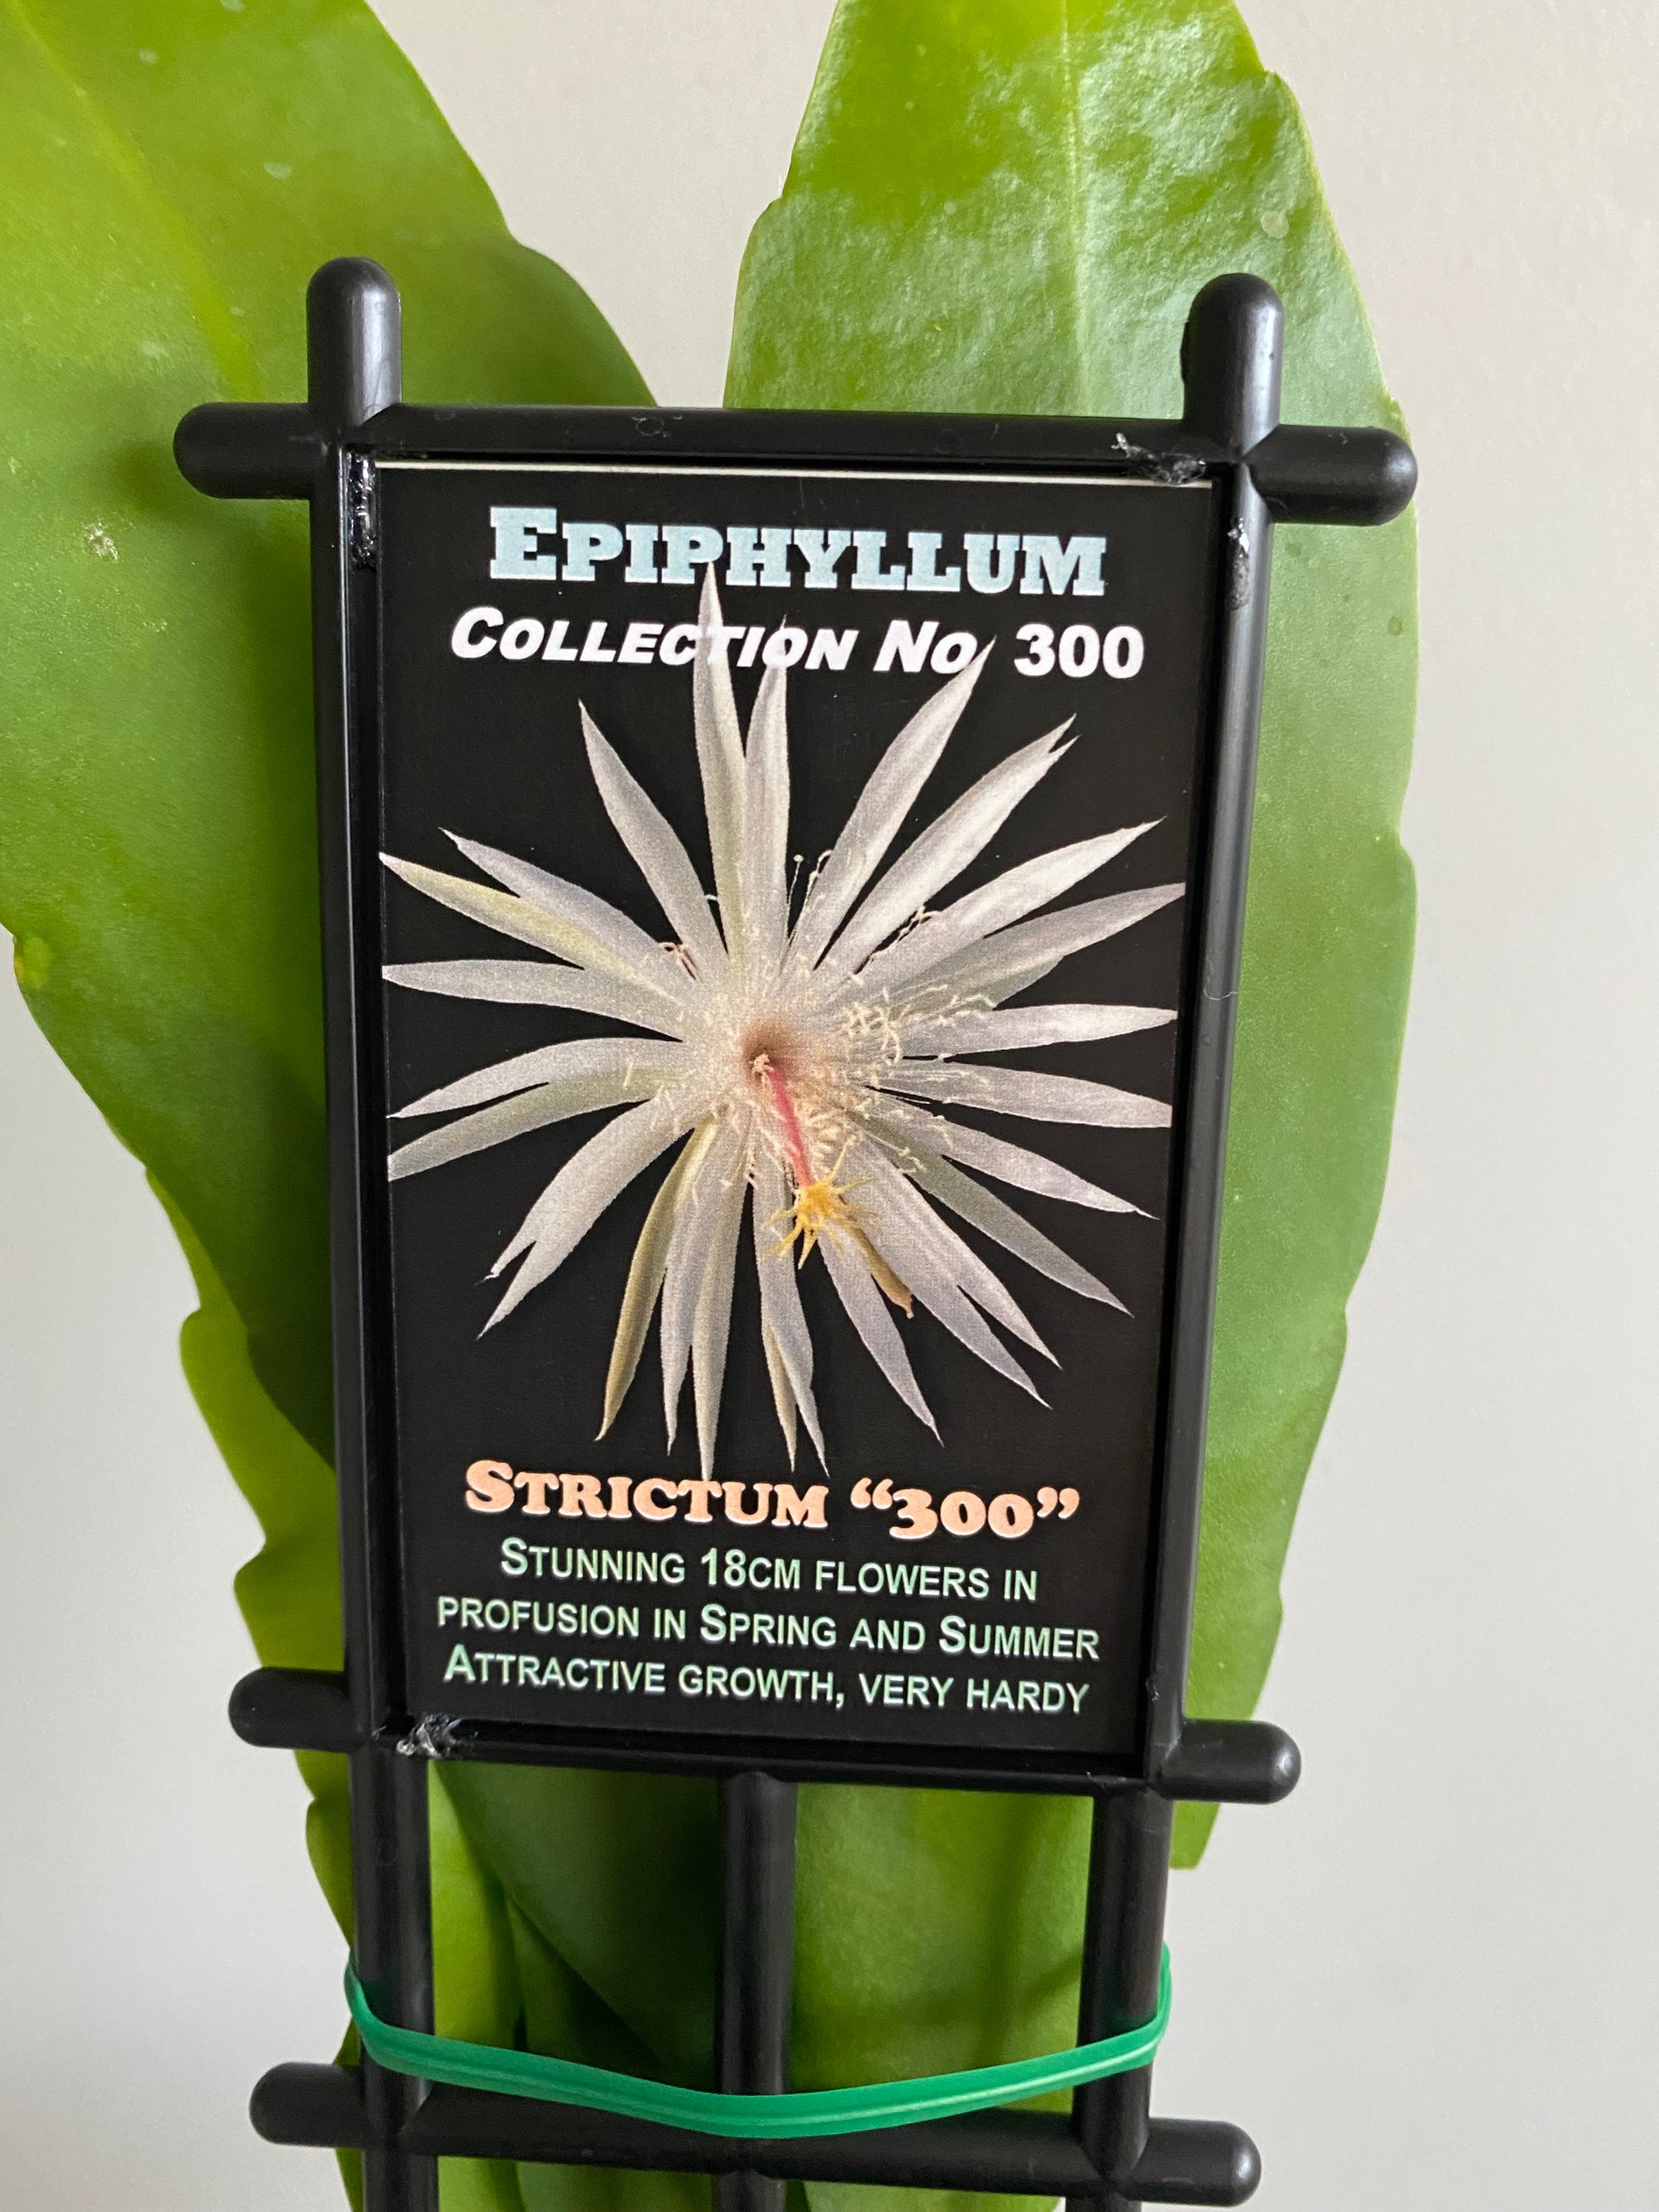 Epiphyllum Strictum "300" - Mistletoe Cactus Collection No. 300